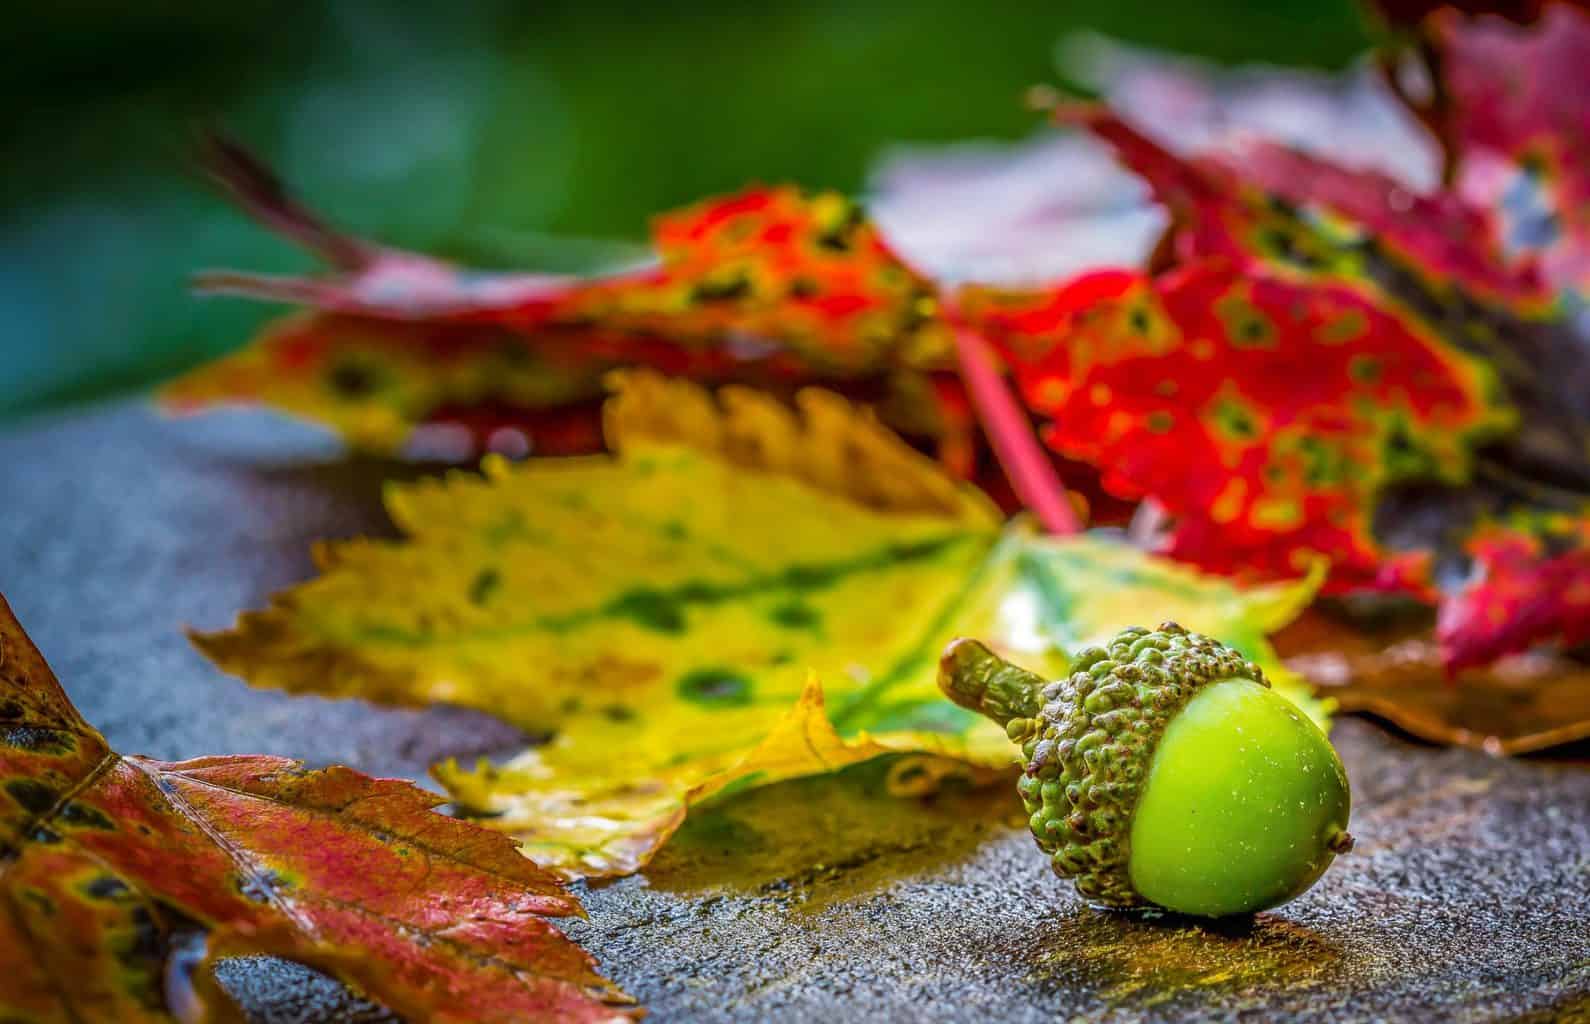 Autumn leaves beside an acorn lying on the floor